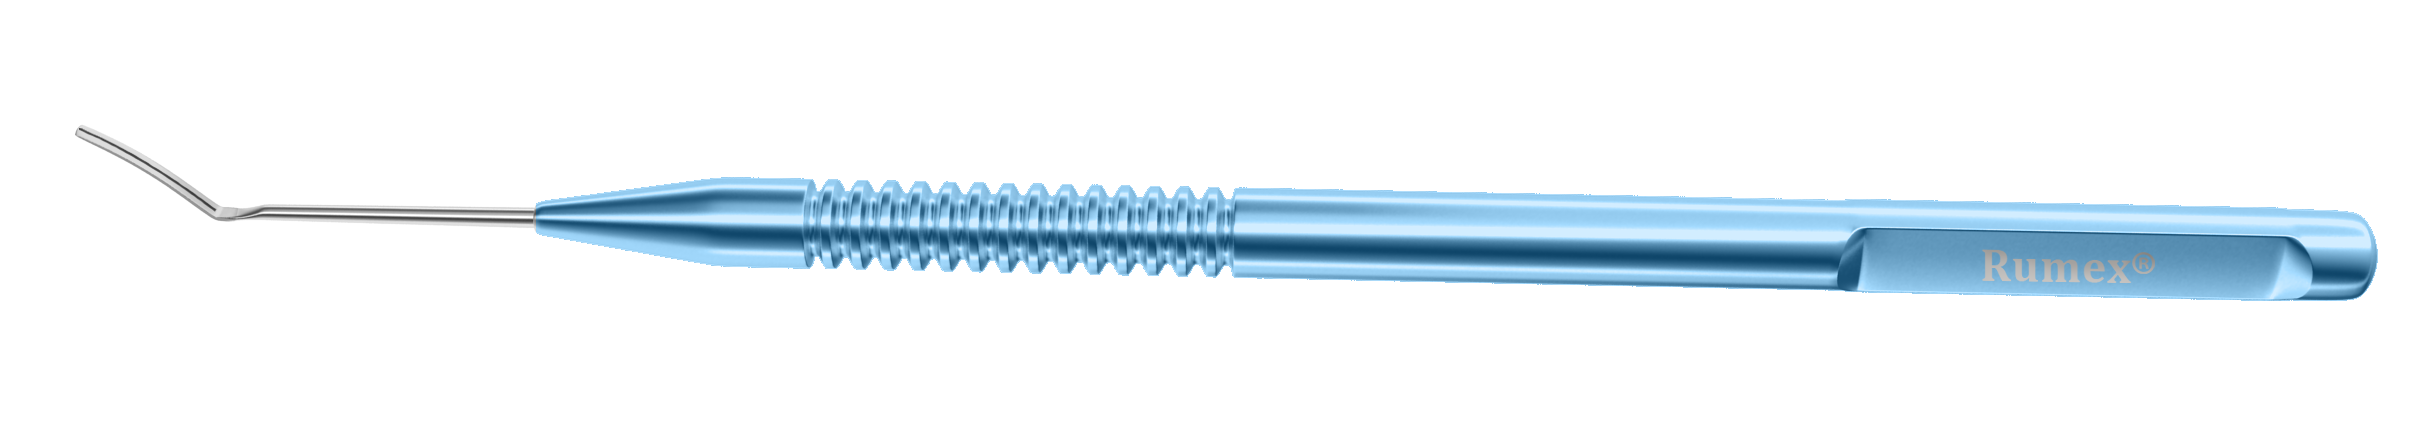 354R 13-171 Spatula for DALK Procedure, 1.00 x 9.00 mm Tip, Length 122 mm, Round Titanium Handle